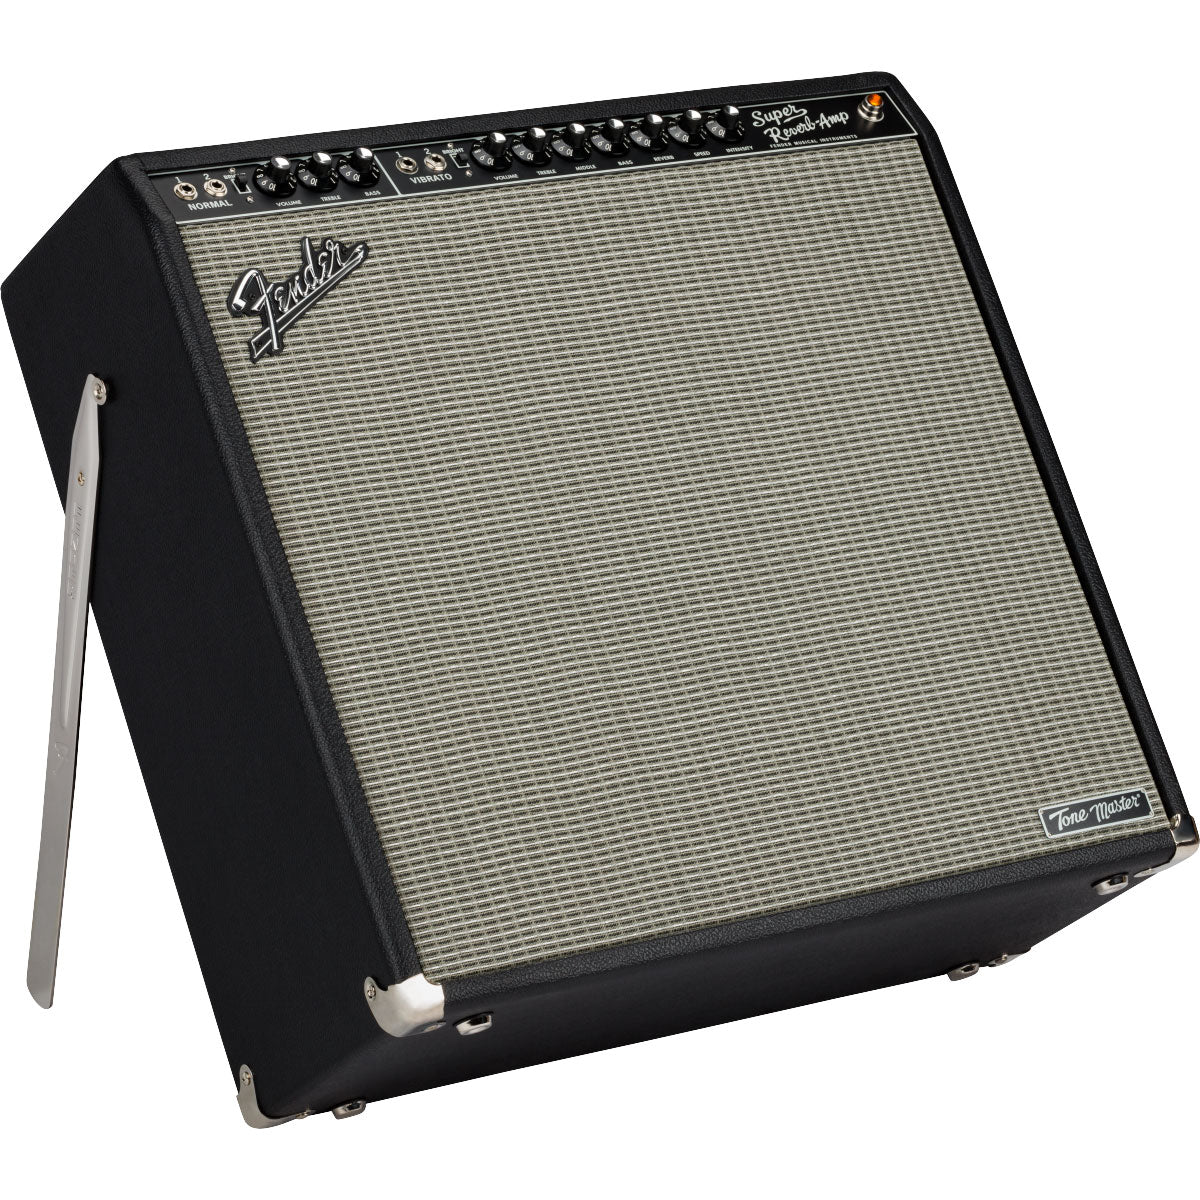 Fender Tone Master Super Reverb Combo Guitar Amplifier